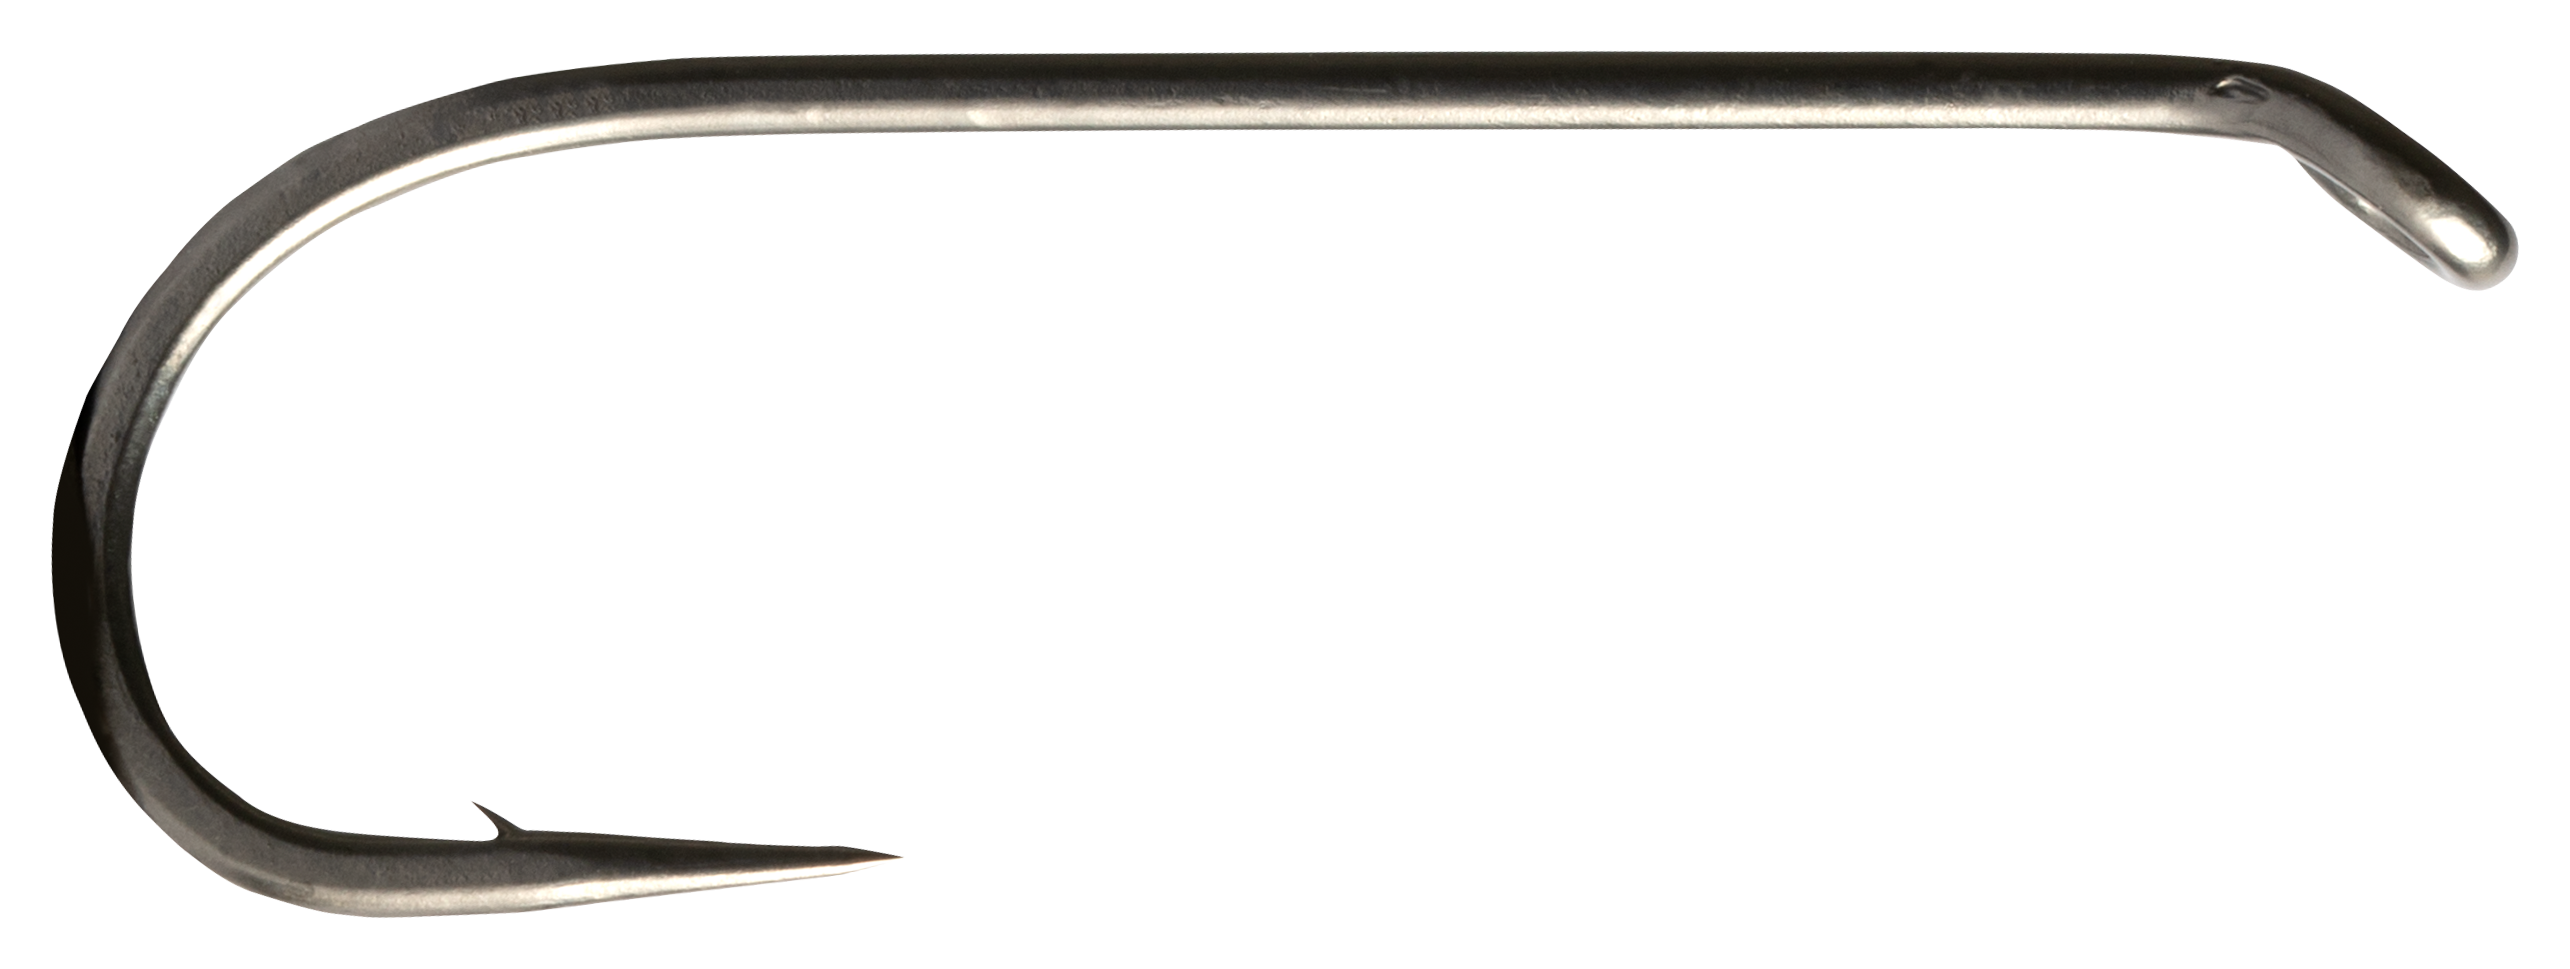 Mustad Heritage Streamer 2X-Strong Fly Hook Model R73AP - 2 - Gun Metal Matte